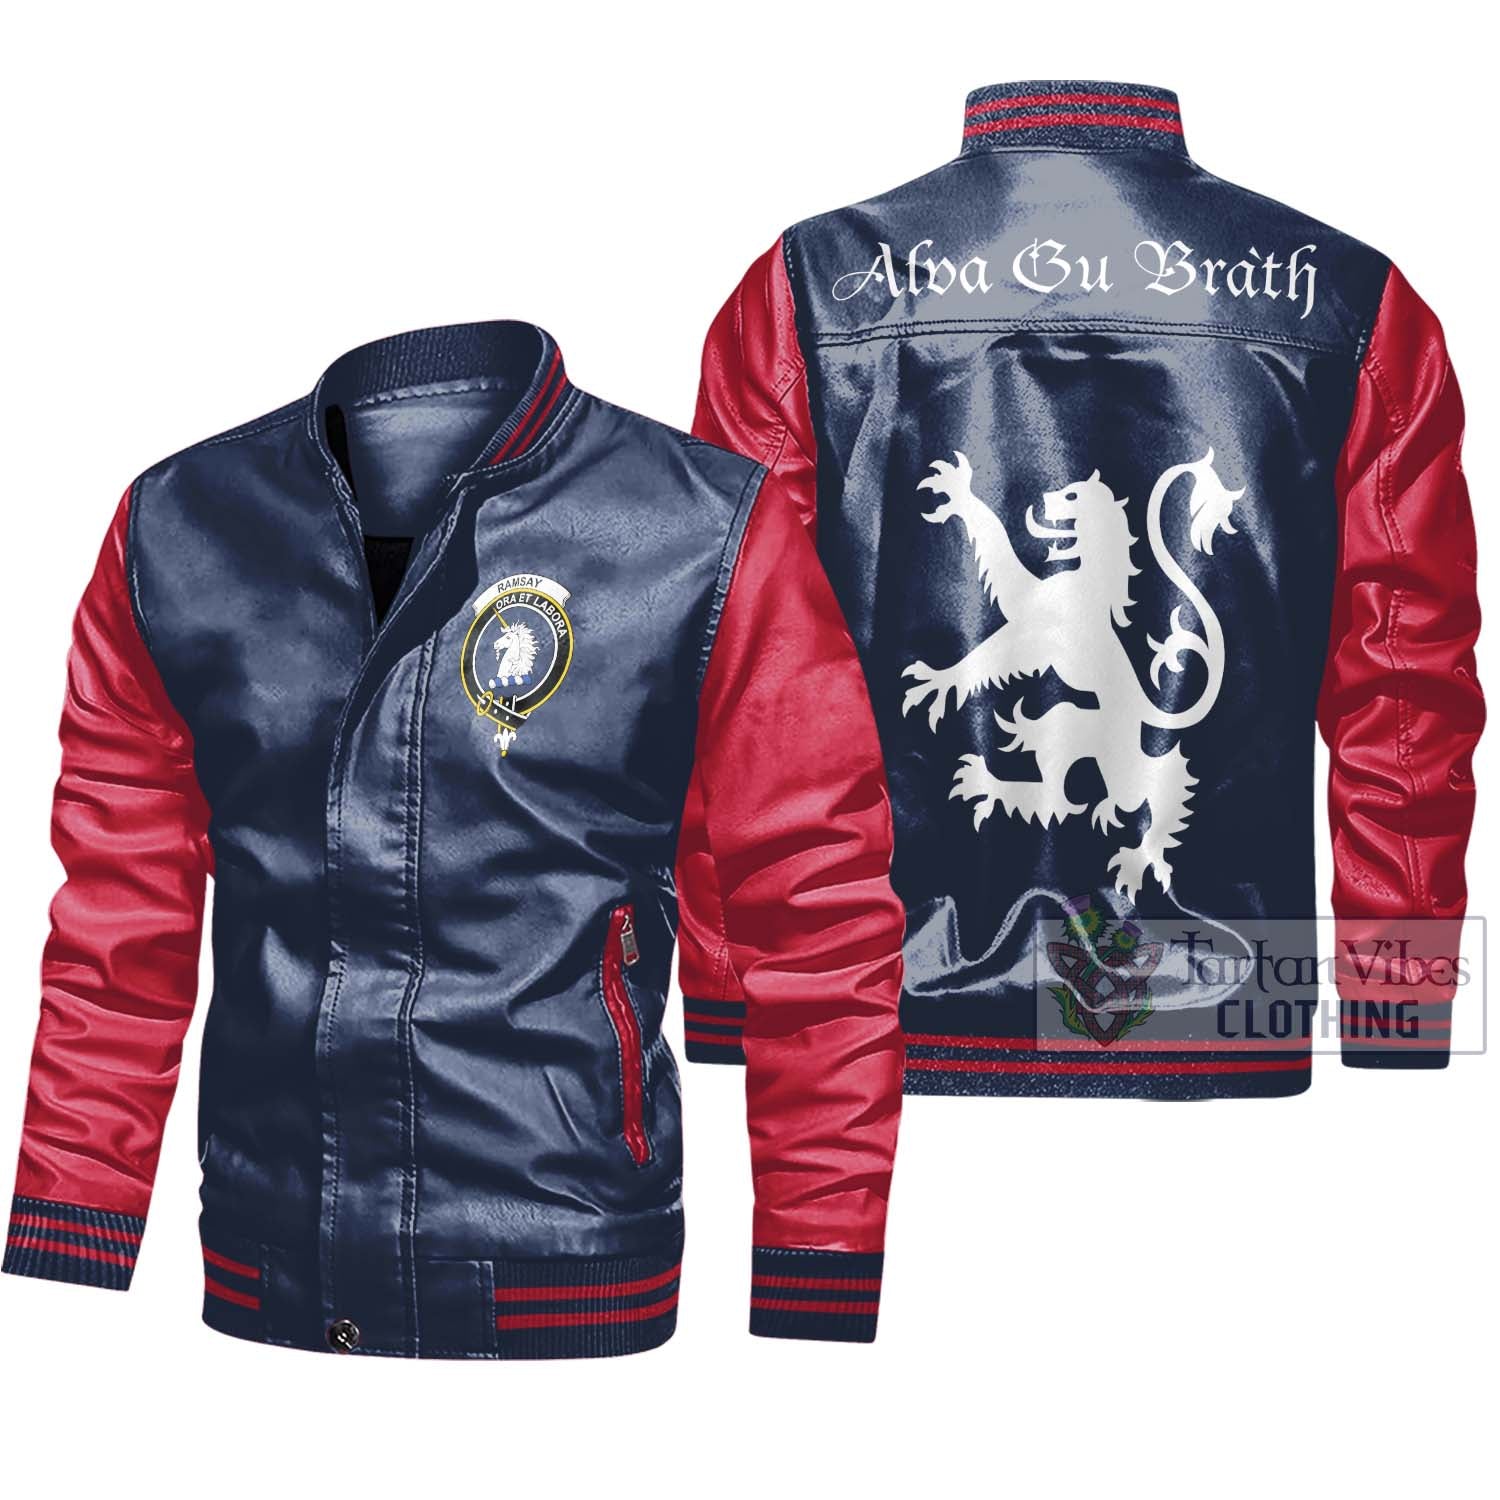 Tartan Vibes Clothing Ramsay Family Crest Leather Bomber Jacket Lion Rampant Alba Gu Brath Style